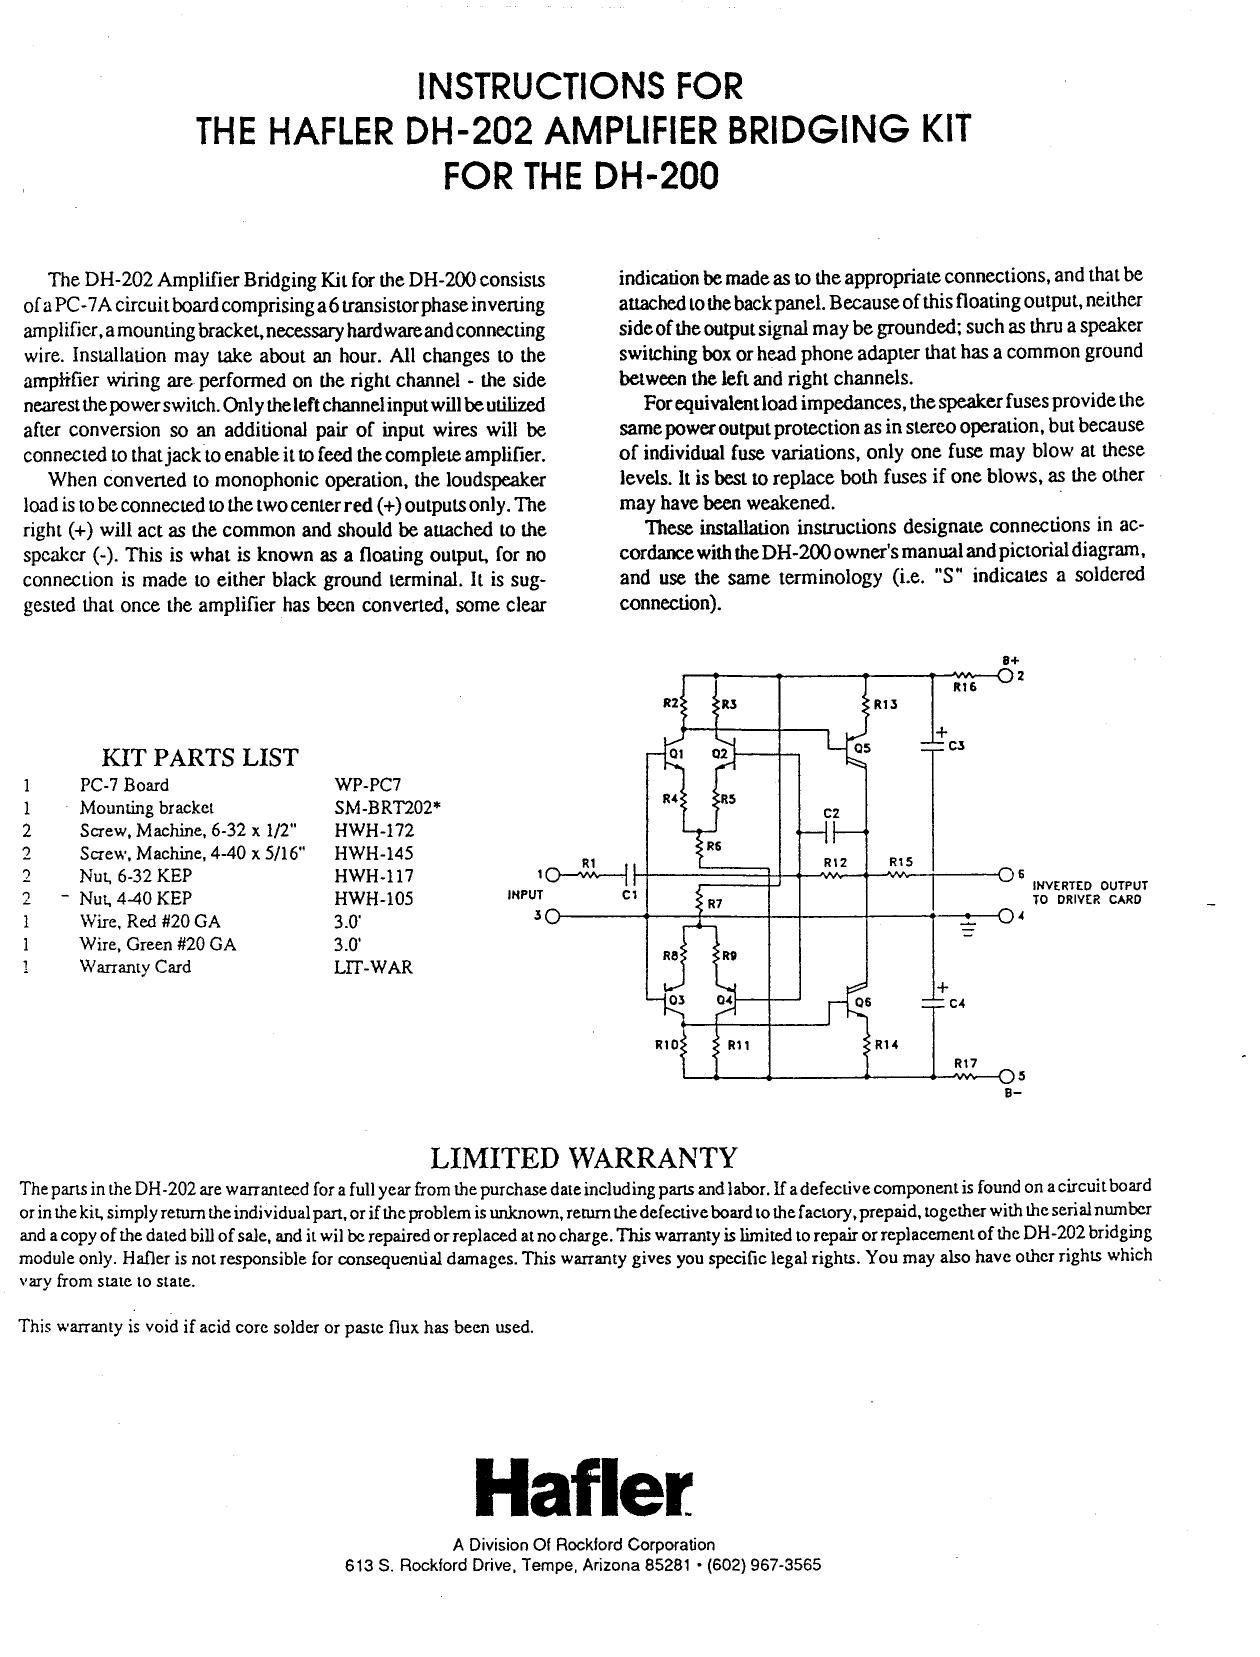 Hafler DH 202 Service Manual